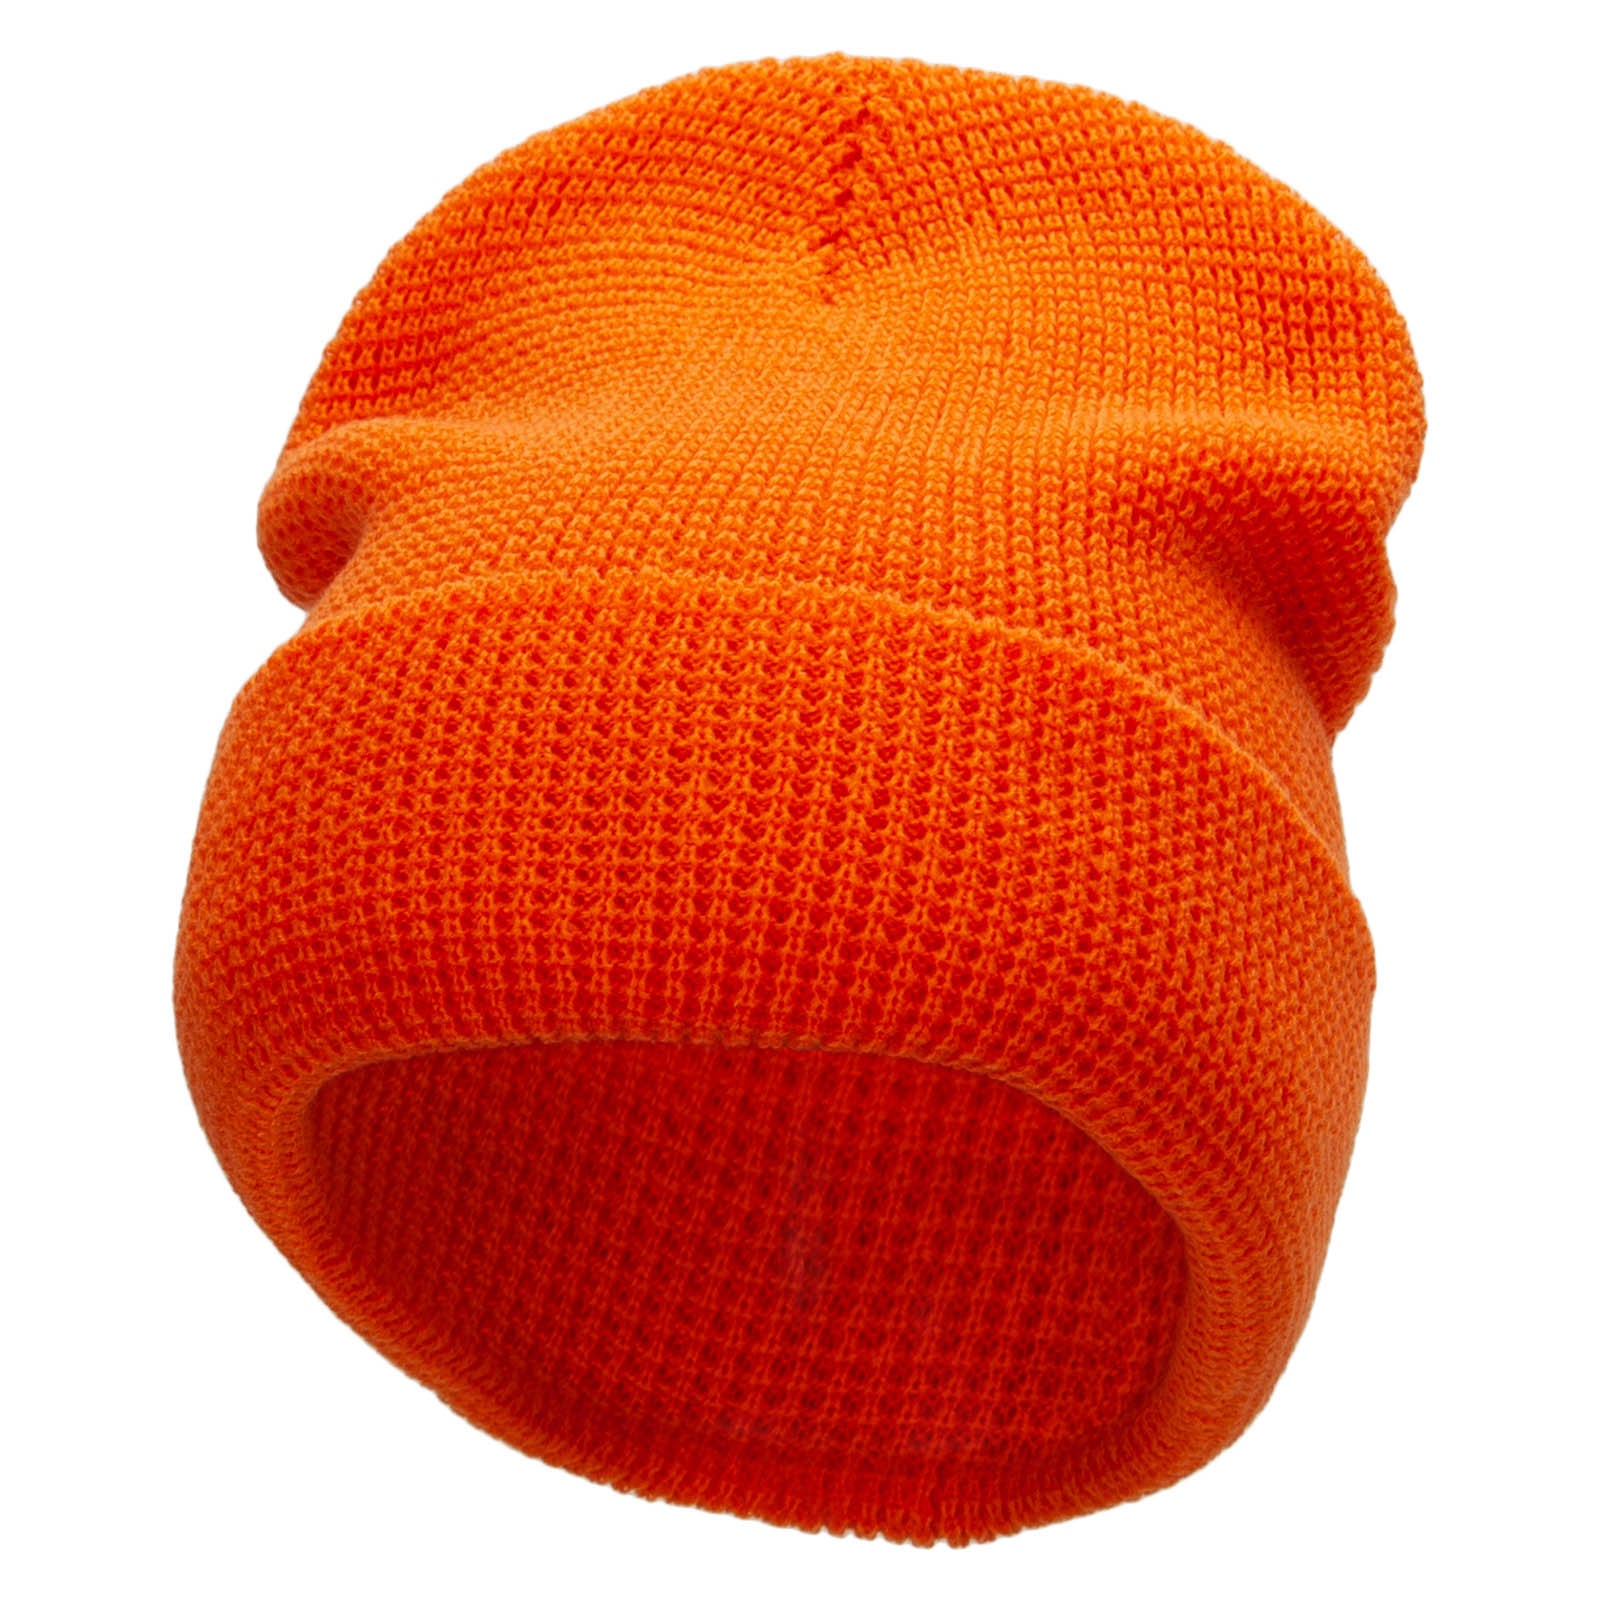 Waffle Knit Cuff Beanie - Orange OSFM